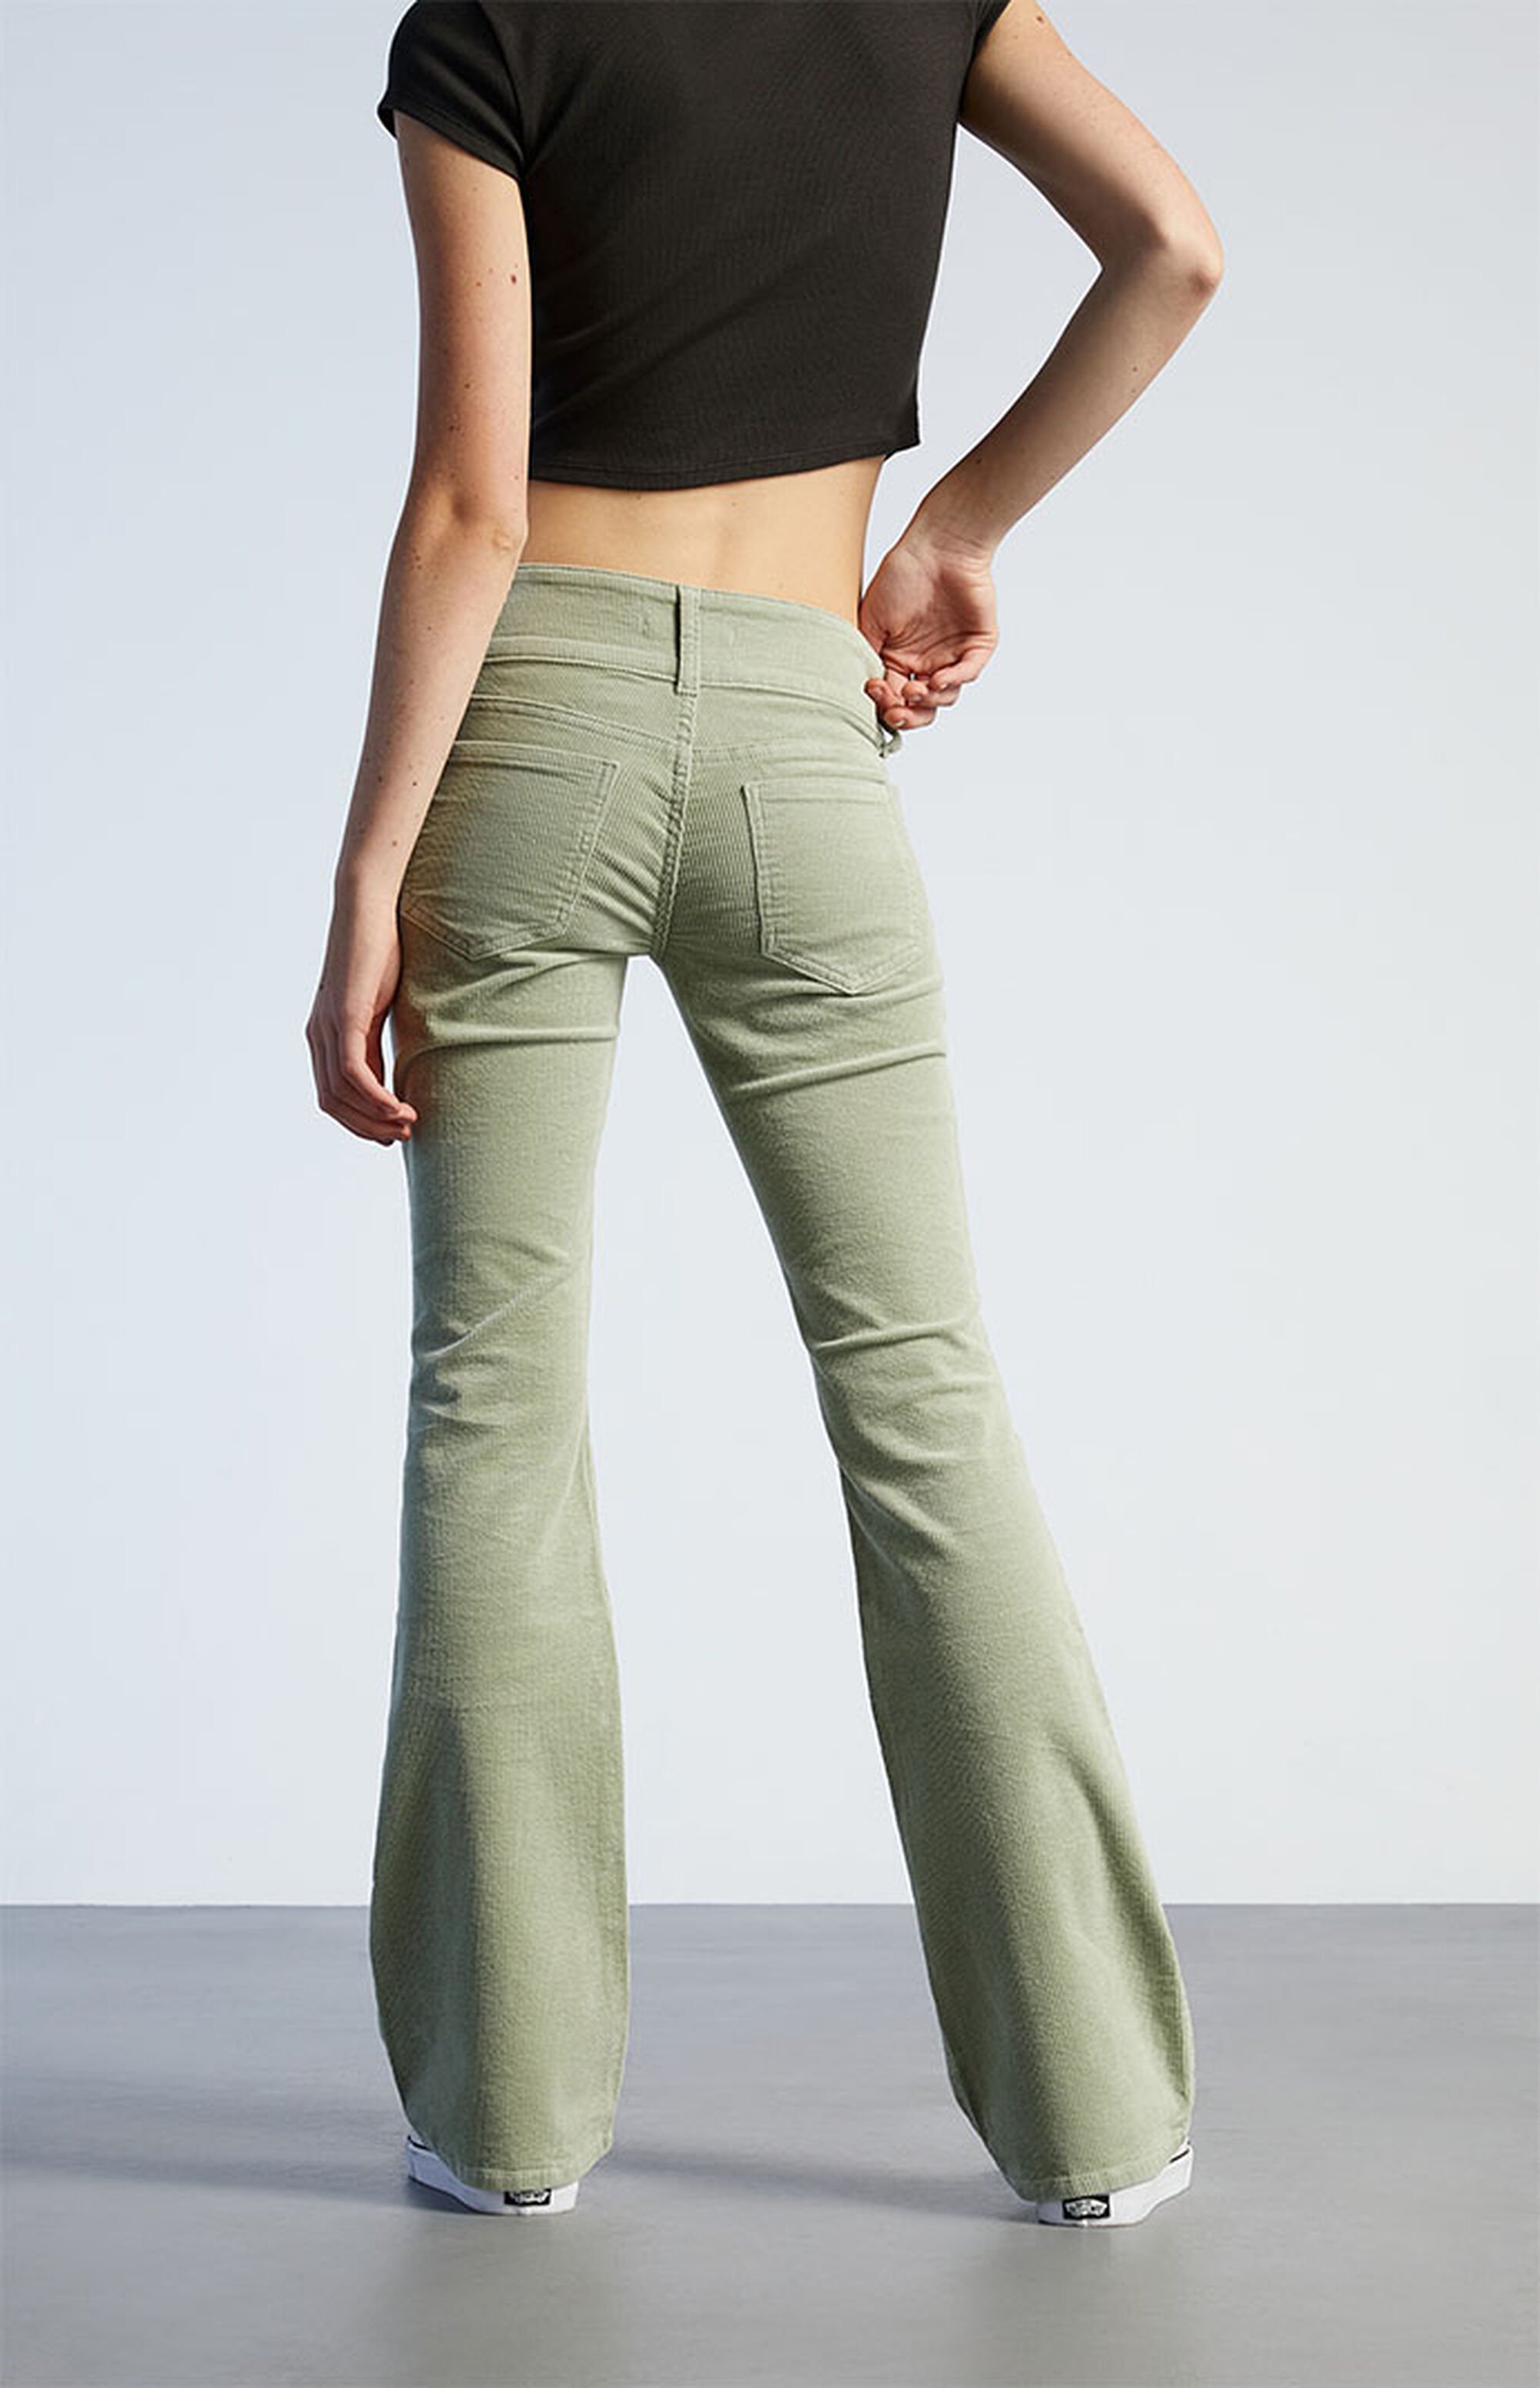 PacSun Green Corduroy Low Rise Bootcut Jeans | PacSun